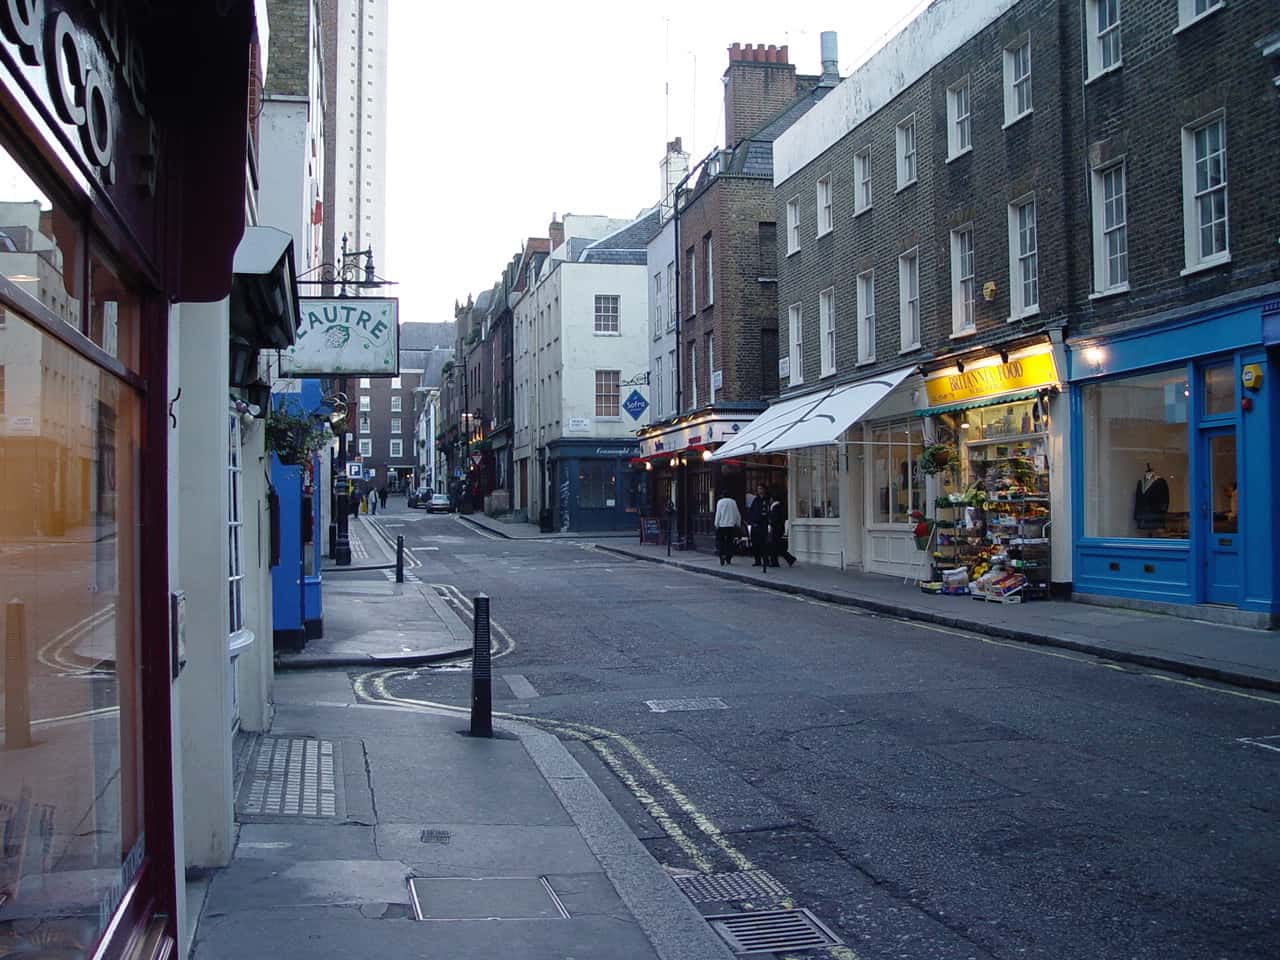 Shepherd Street in Westminster, London, England